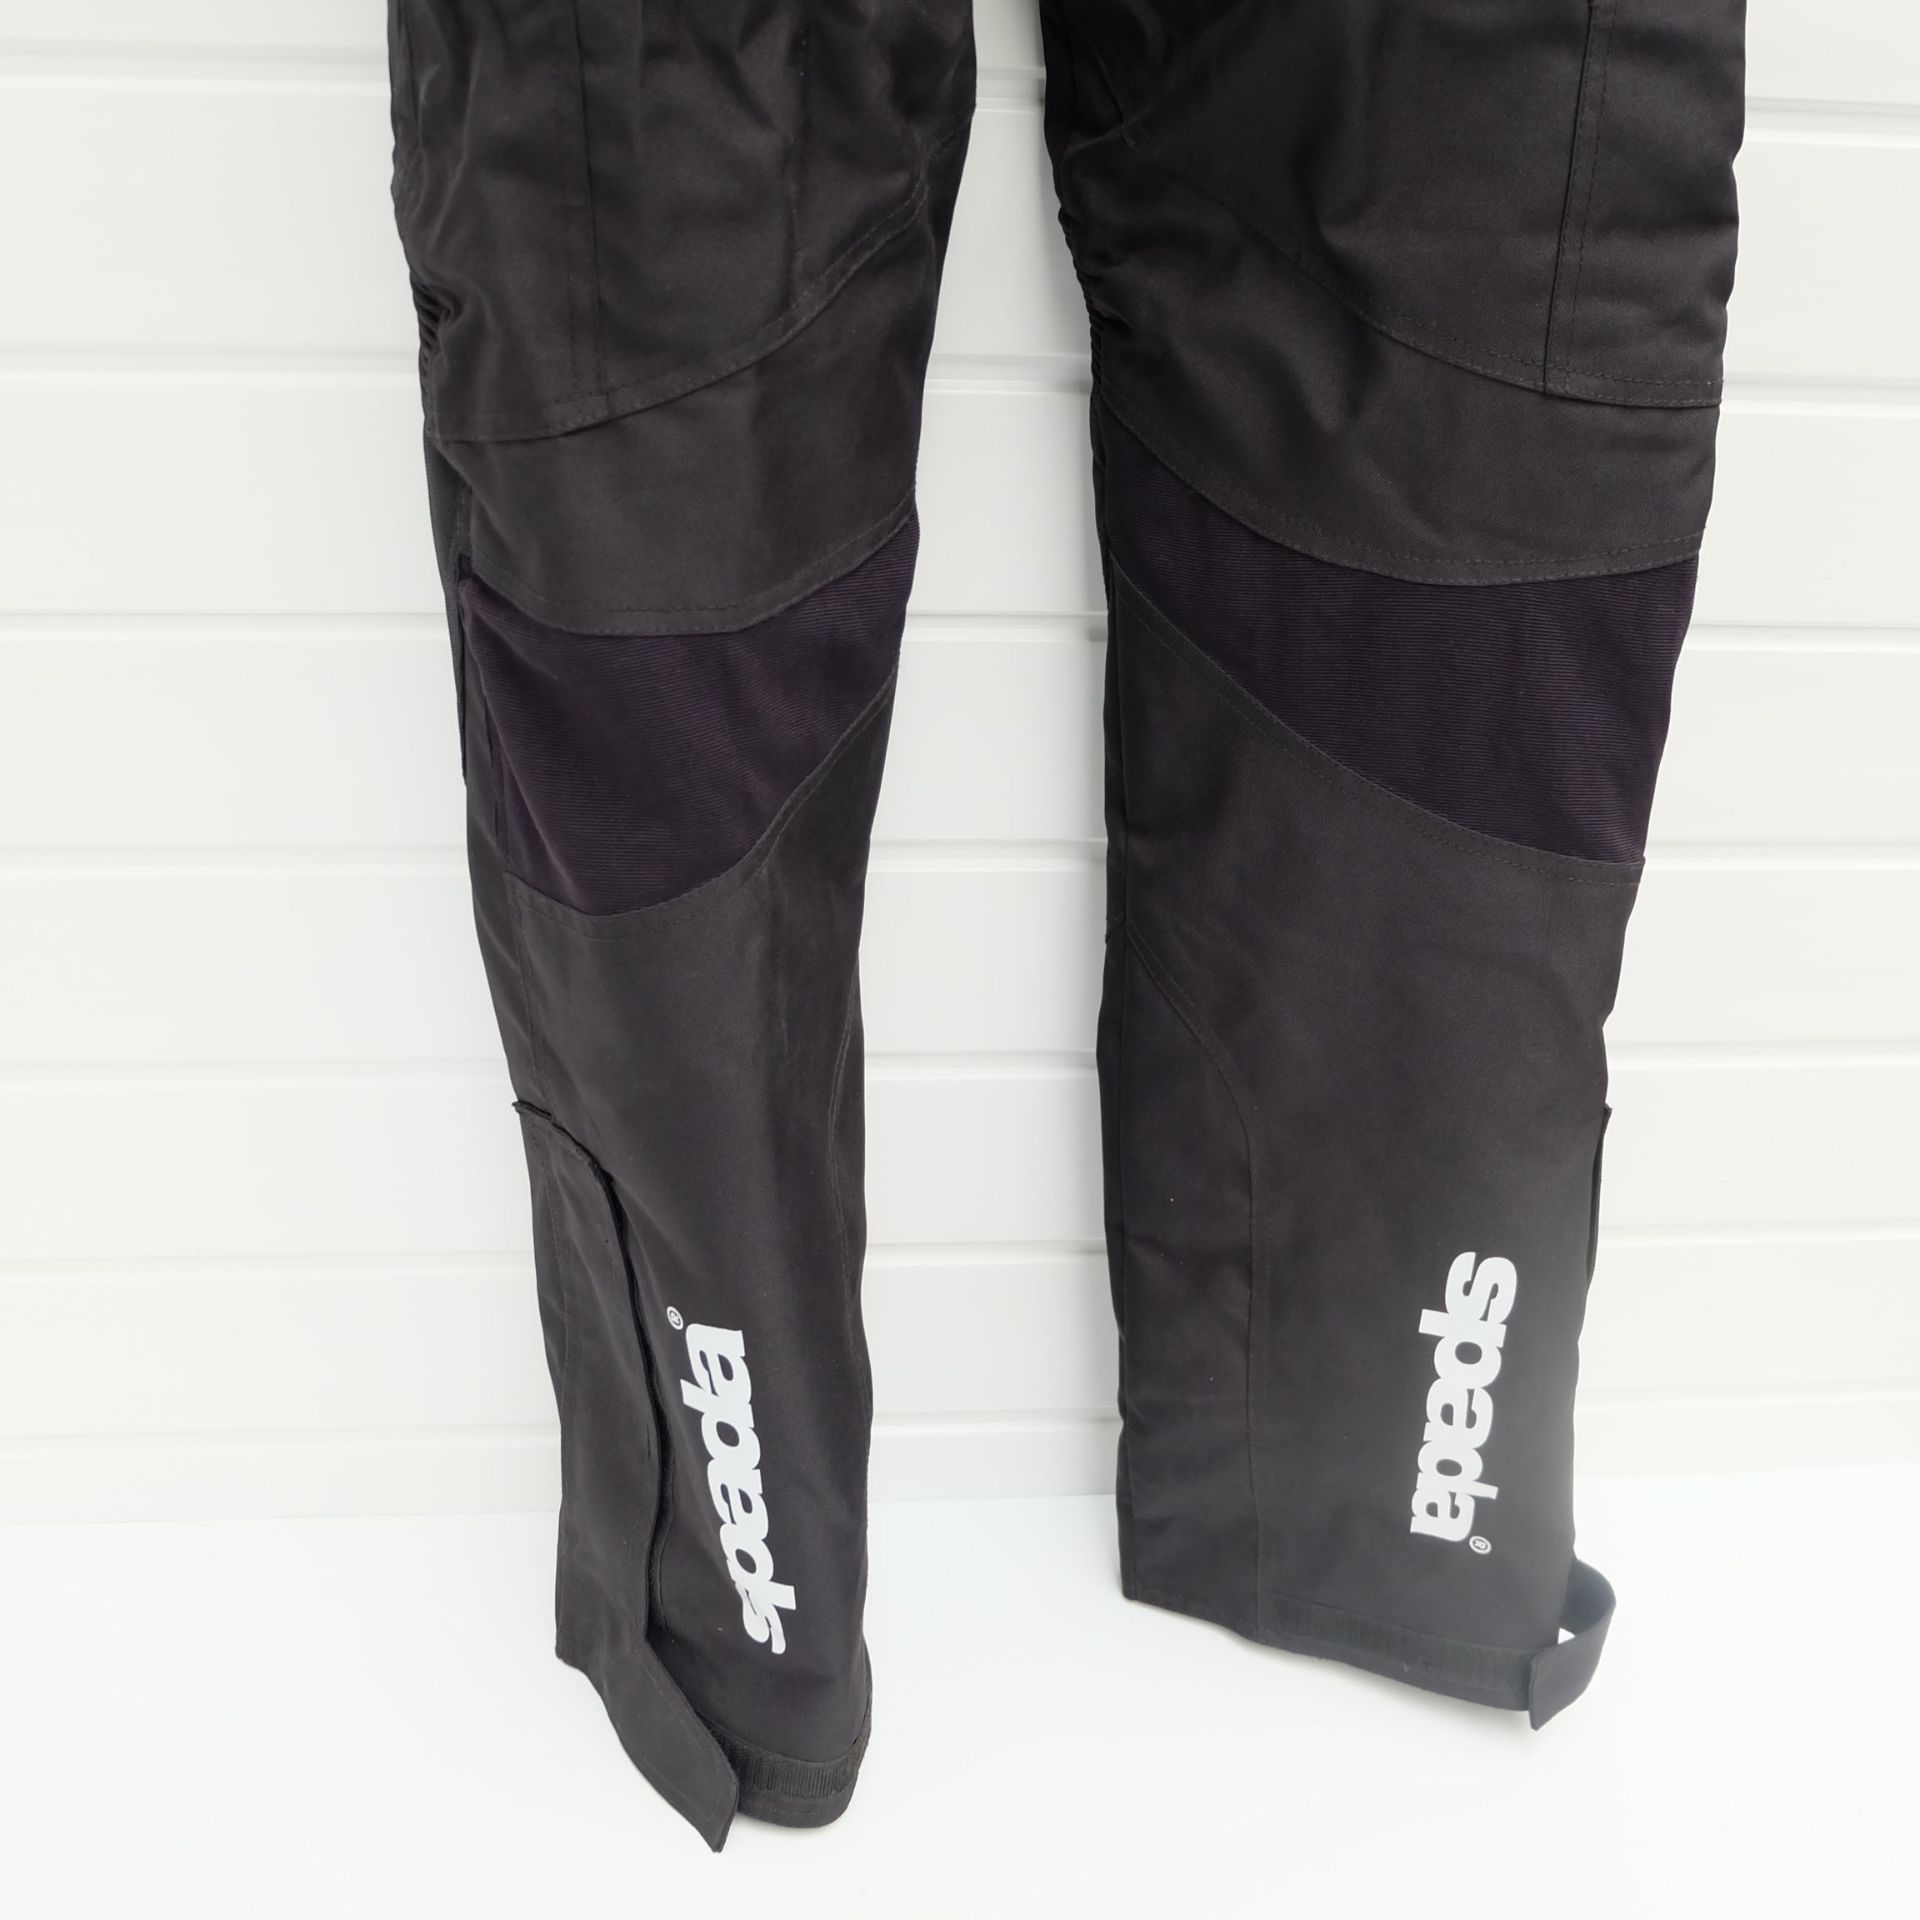 Spada Turini Motorcycle Trousers (Mens) Black. Medium - Image 6 of 10